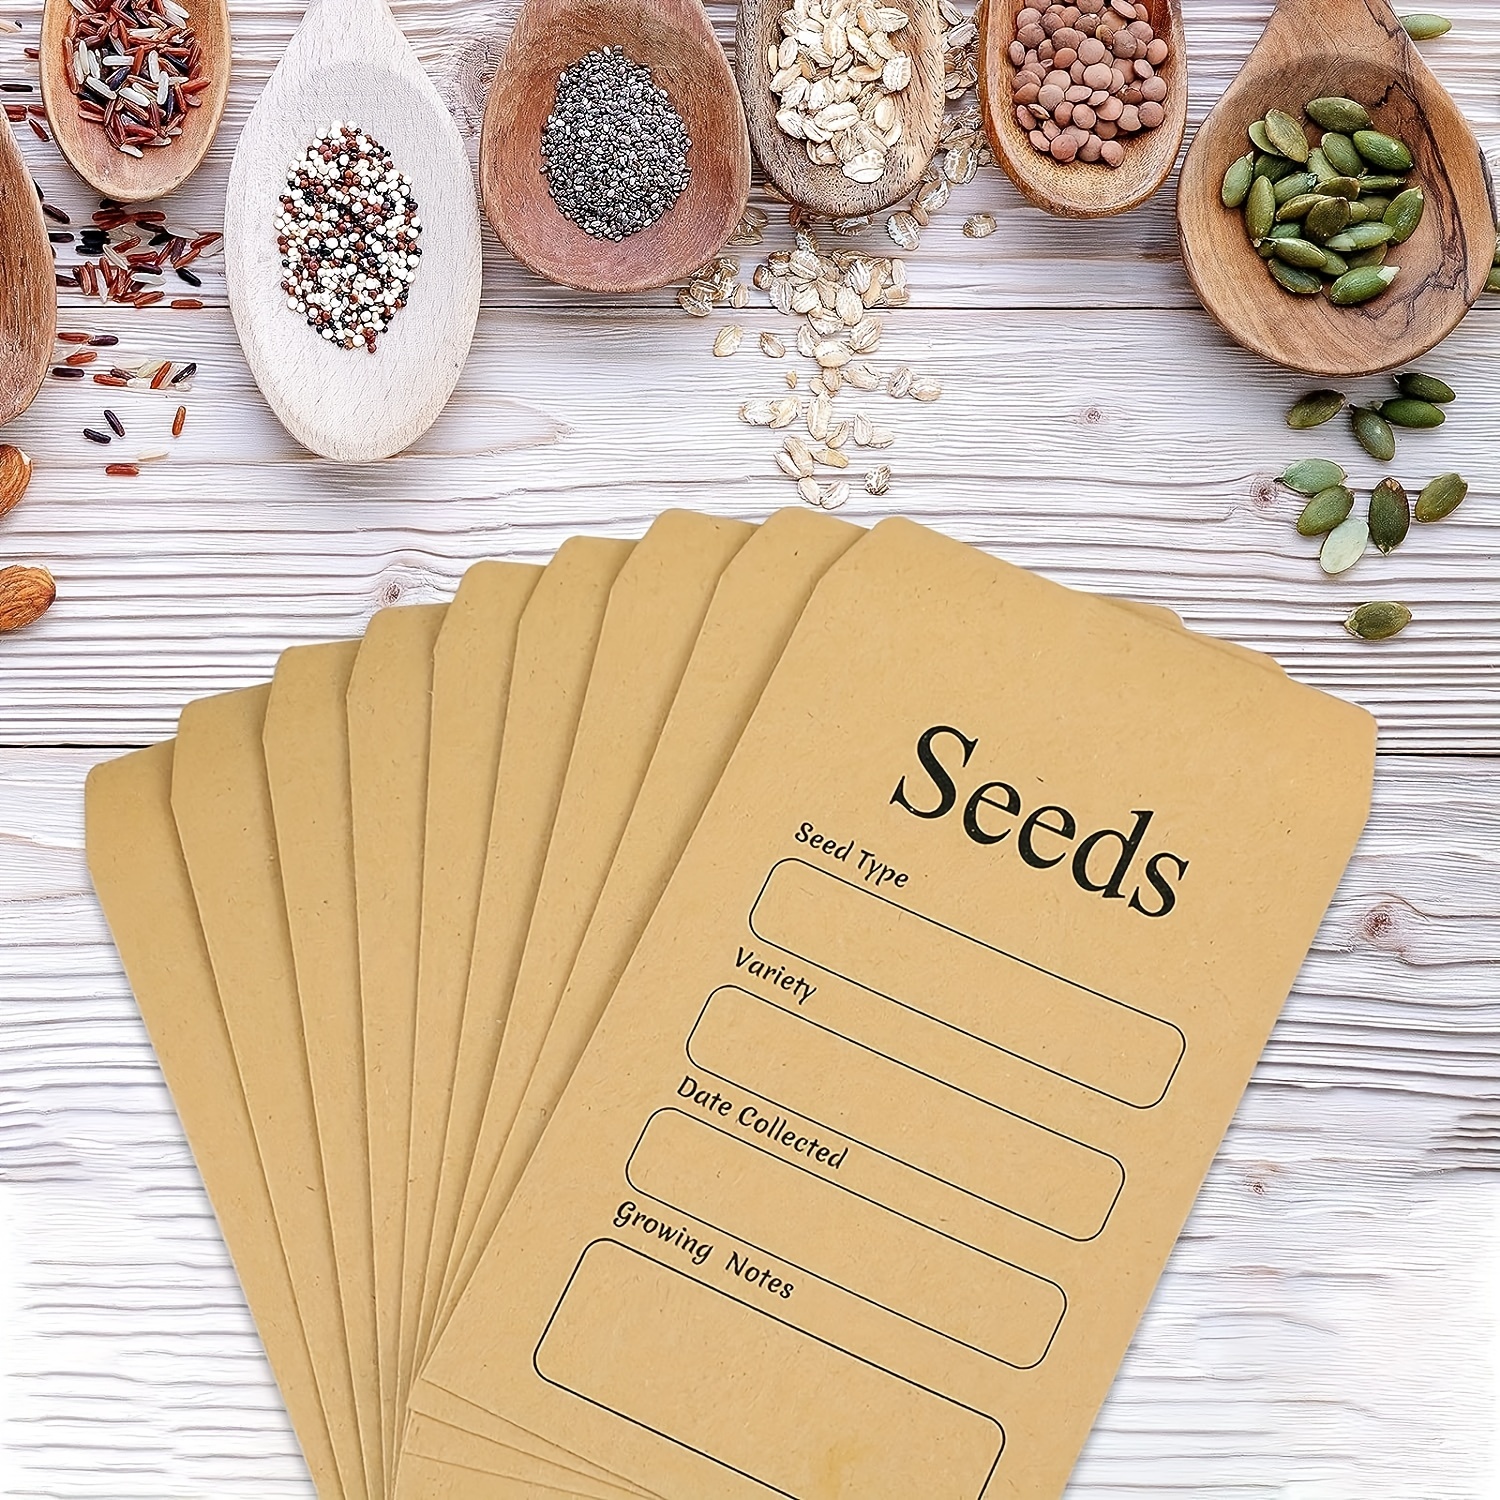 150 Pcs Seed Envelopes, Resealable Seed Packets Envelope Self Adhesive  Sealing Seed Saving Envelopes Small Brown Paper Seed Storage Envelopes  3.1x4.7